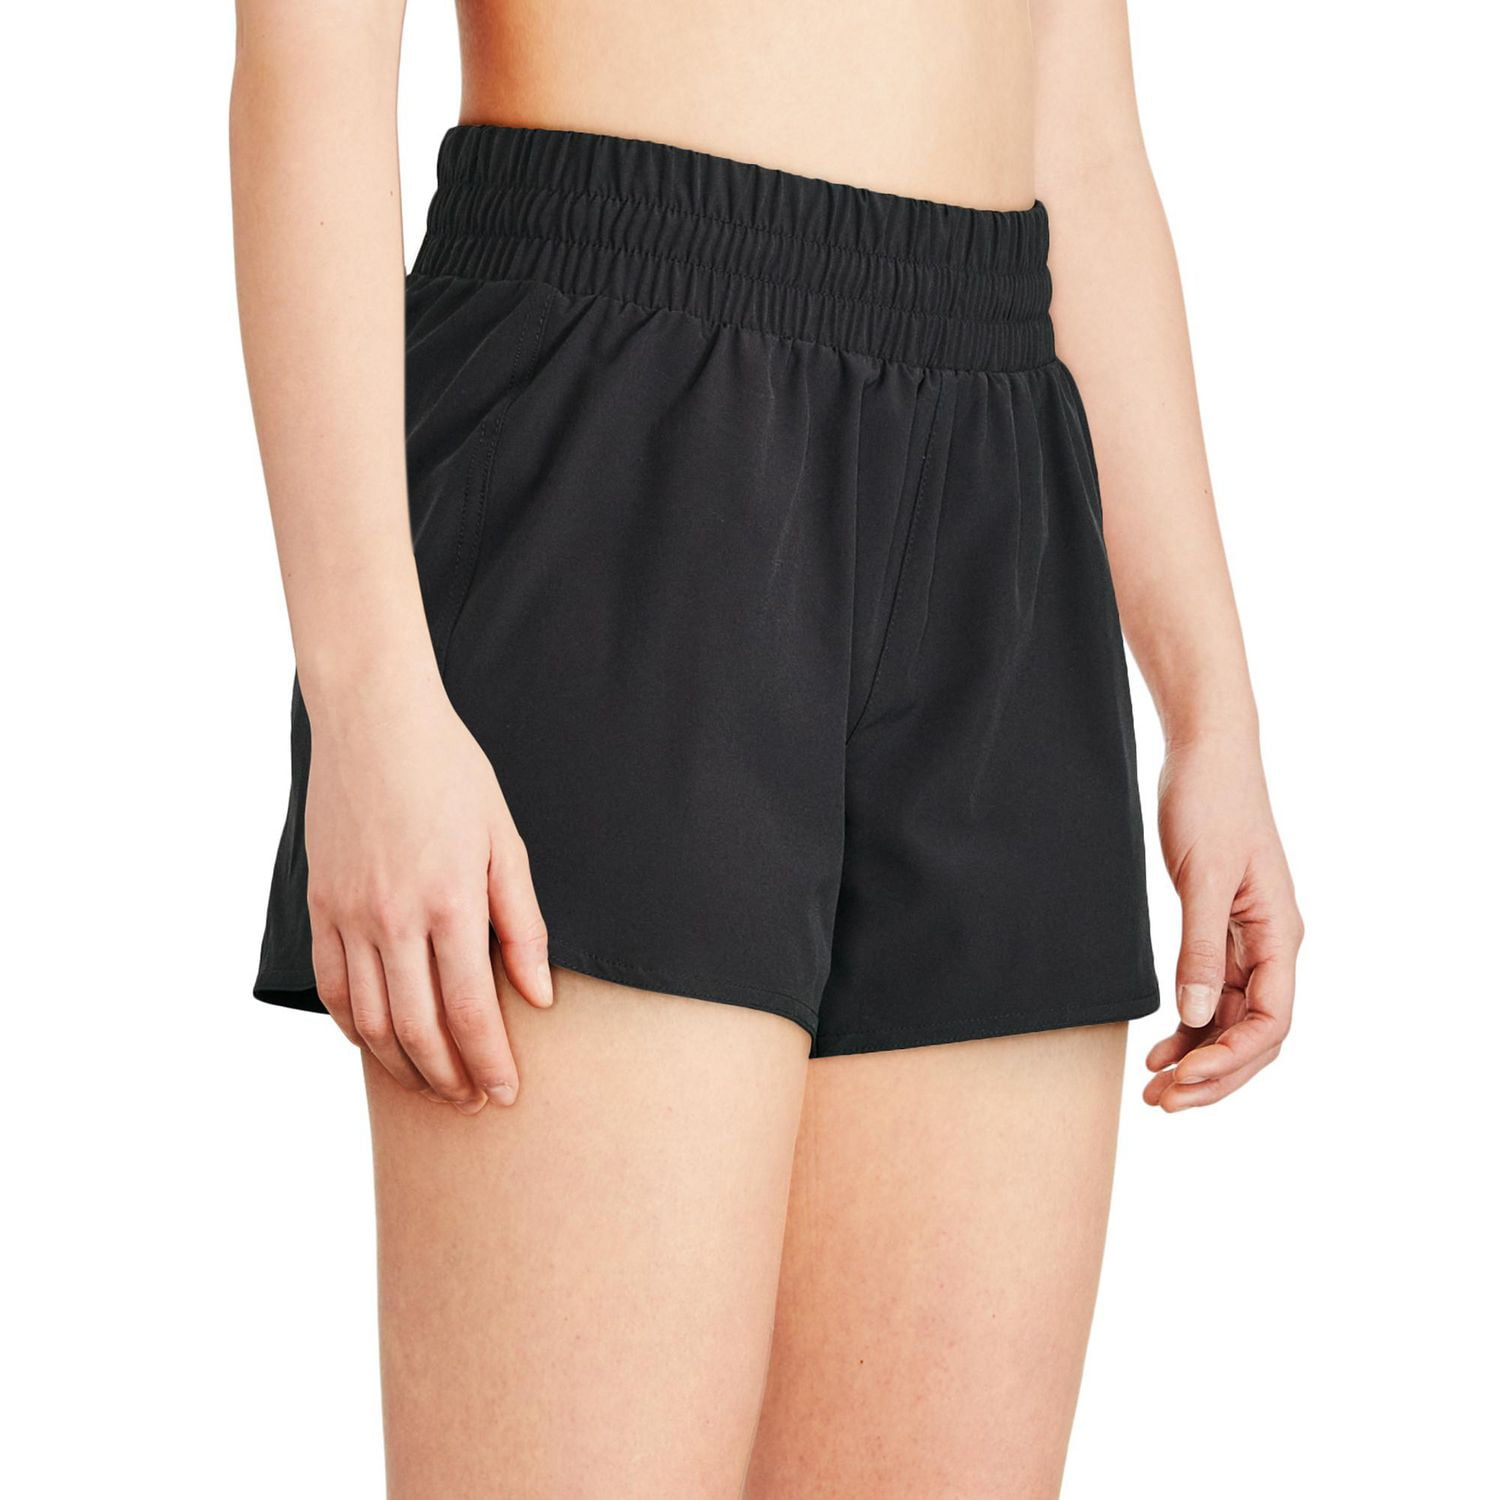 Black shorts for women – Active shape wear - 2 back pockets